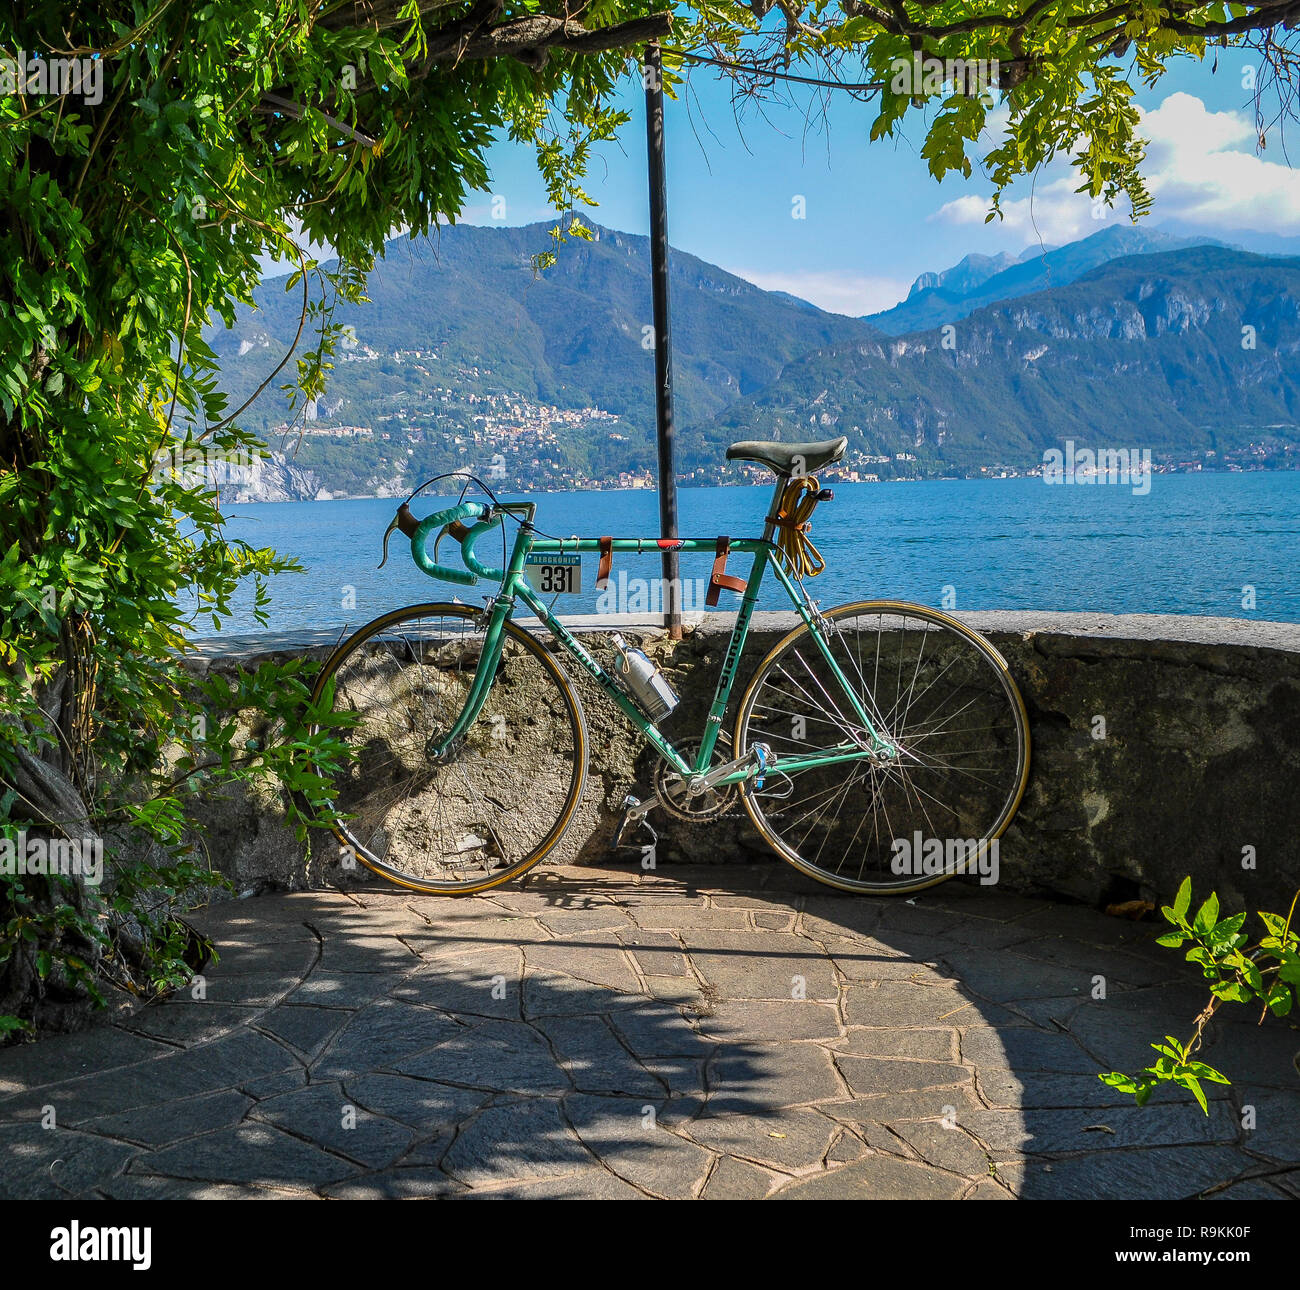 1971 Bianchi bicycle on Como lake Stock Photo